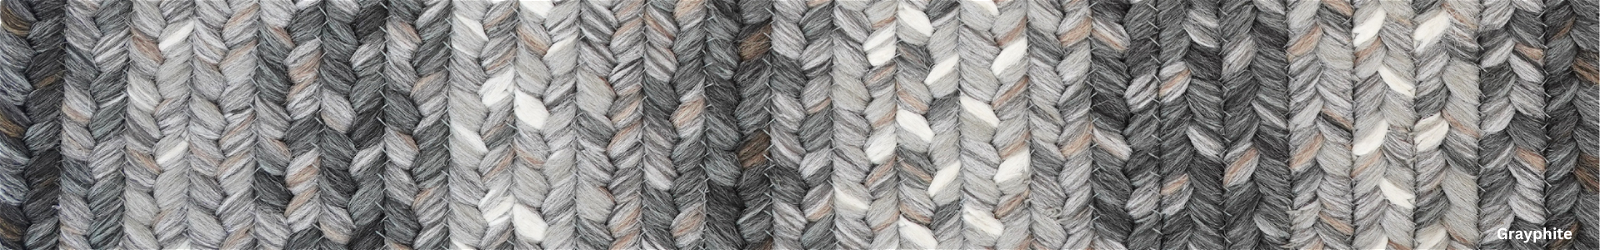 Polypropylene - Grey Braided Rugs